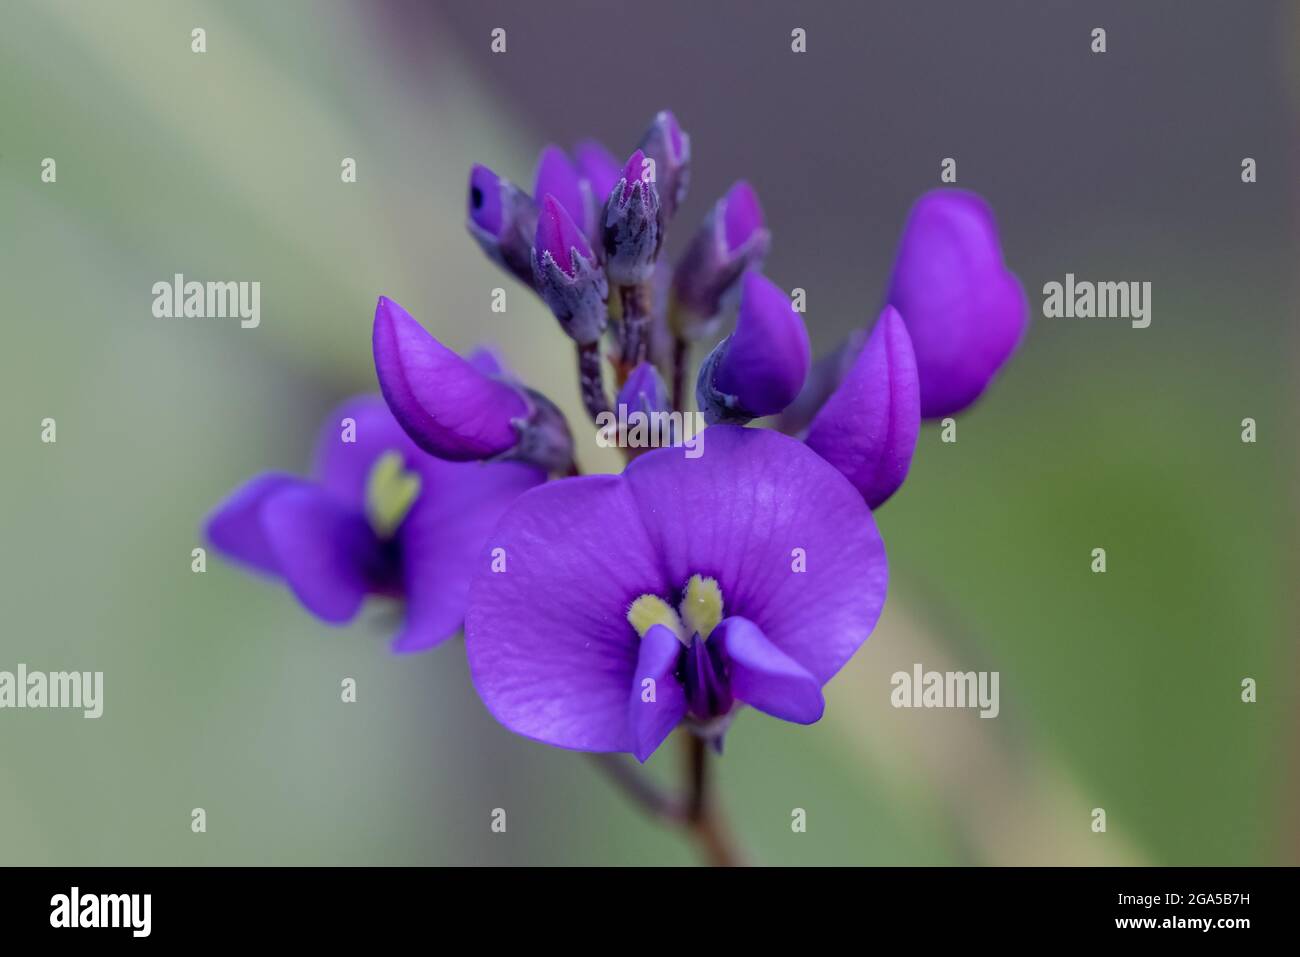 False Sarsaparilla plant in flower Stock Photo